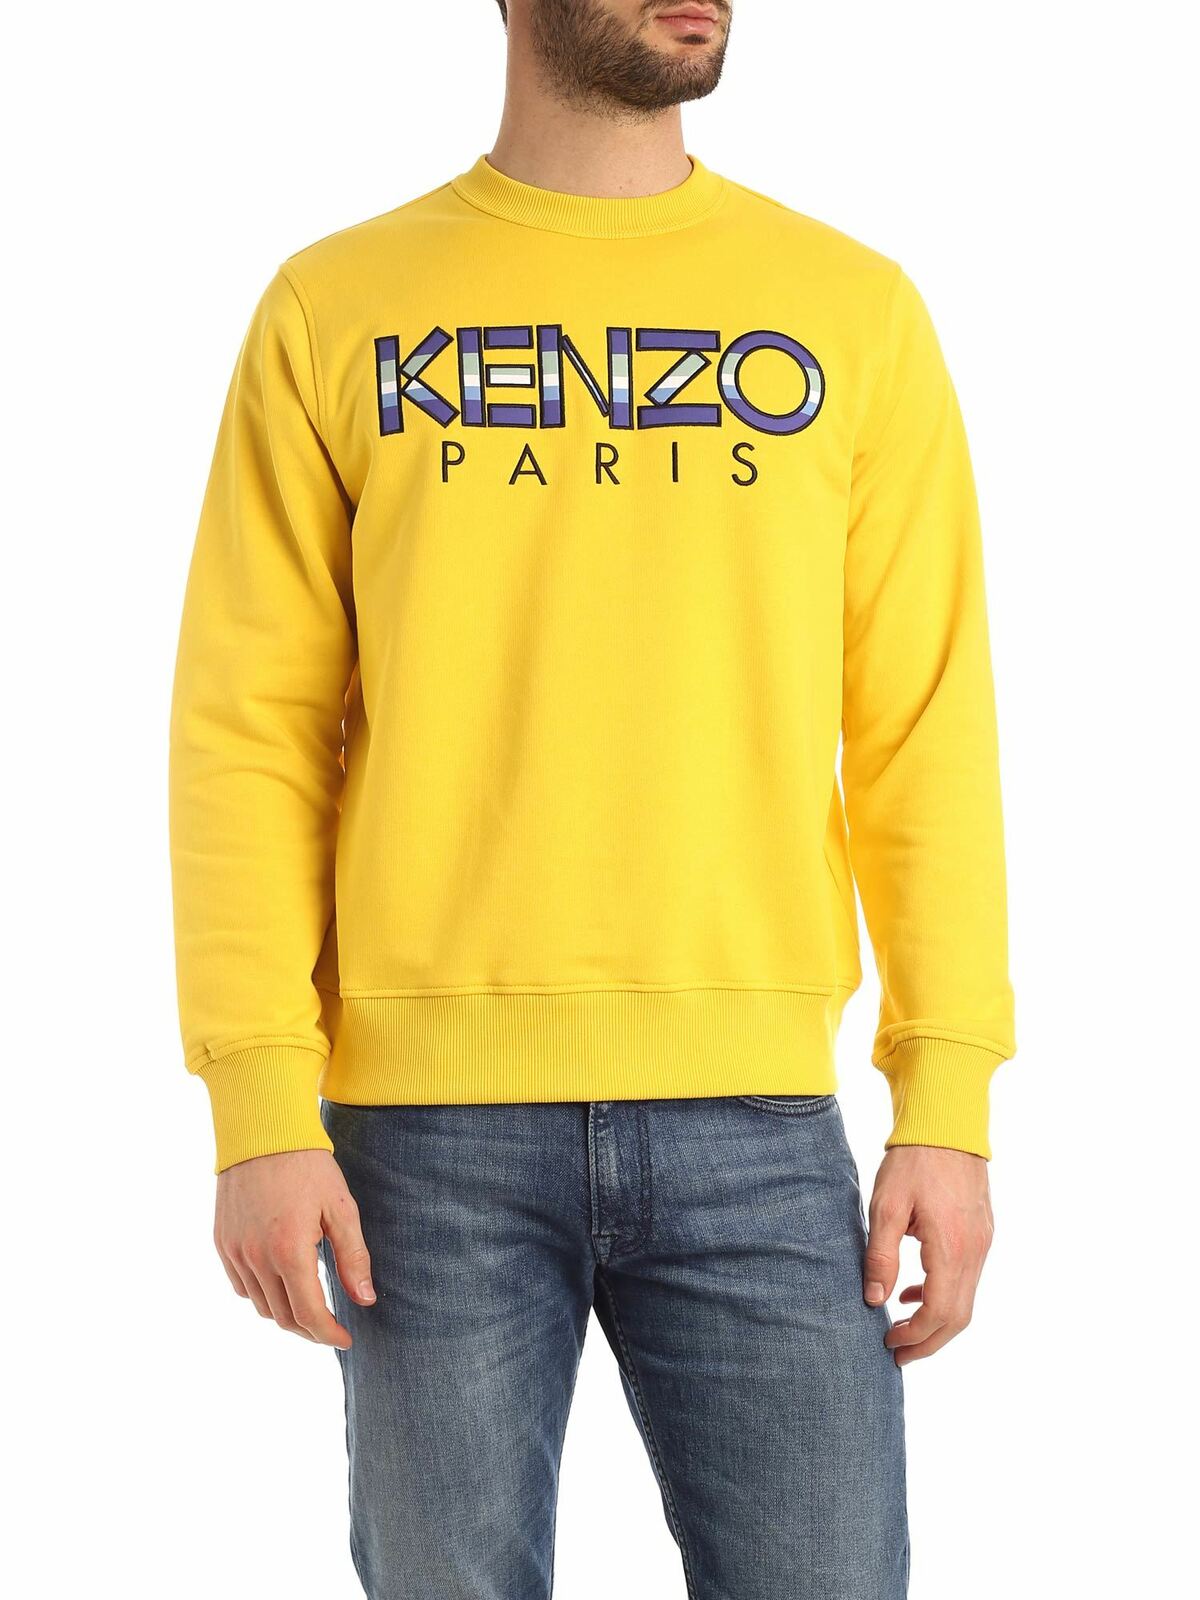 Kenzo Paris Sweatshirt In Yellow